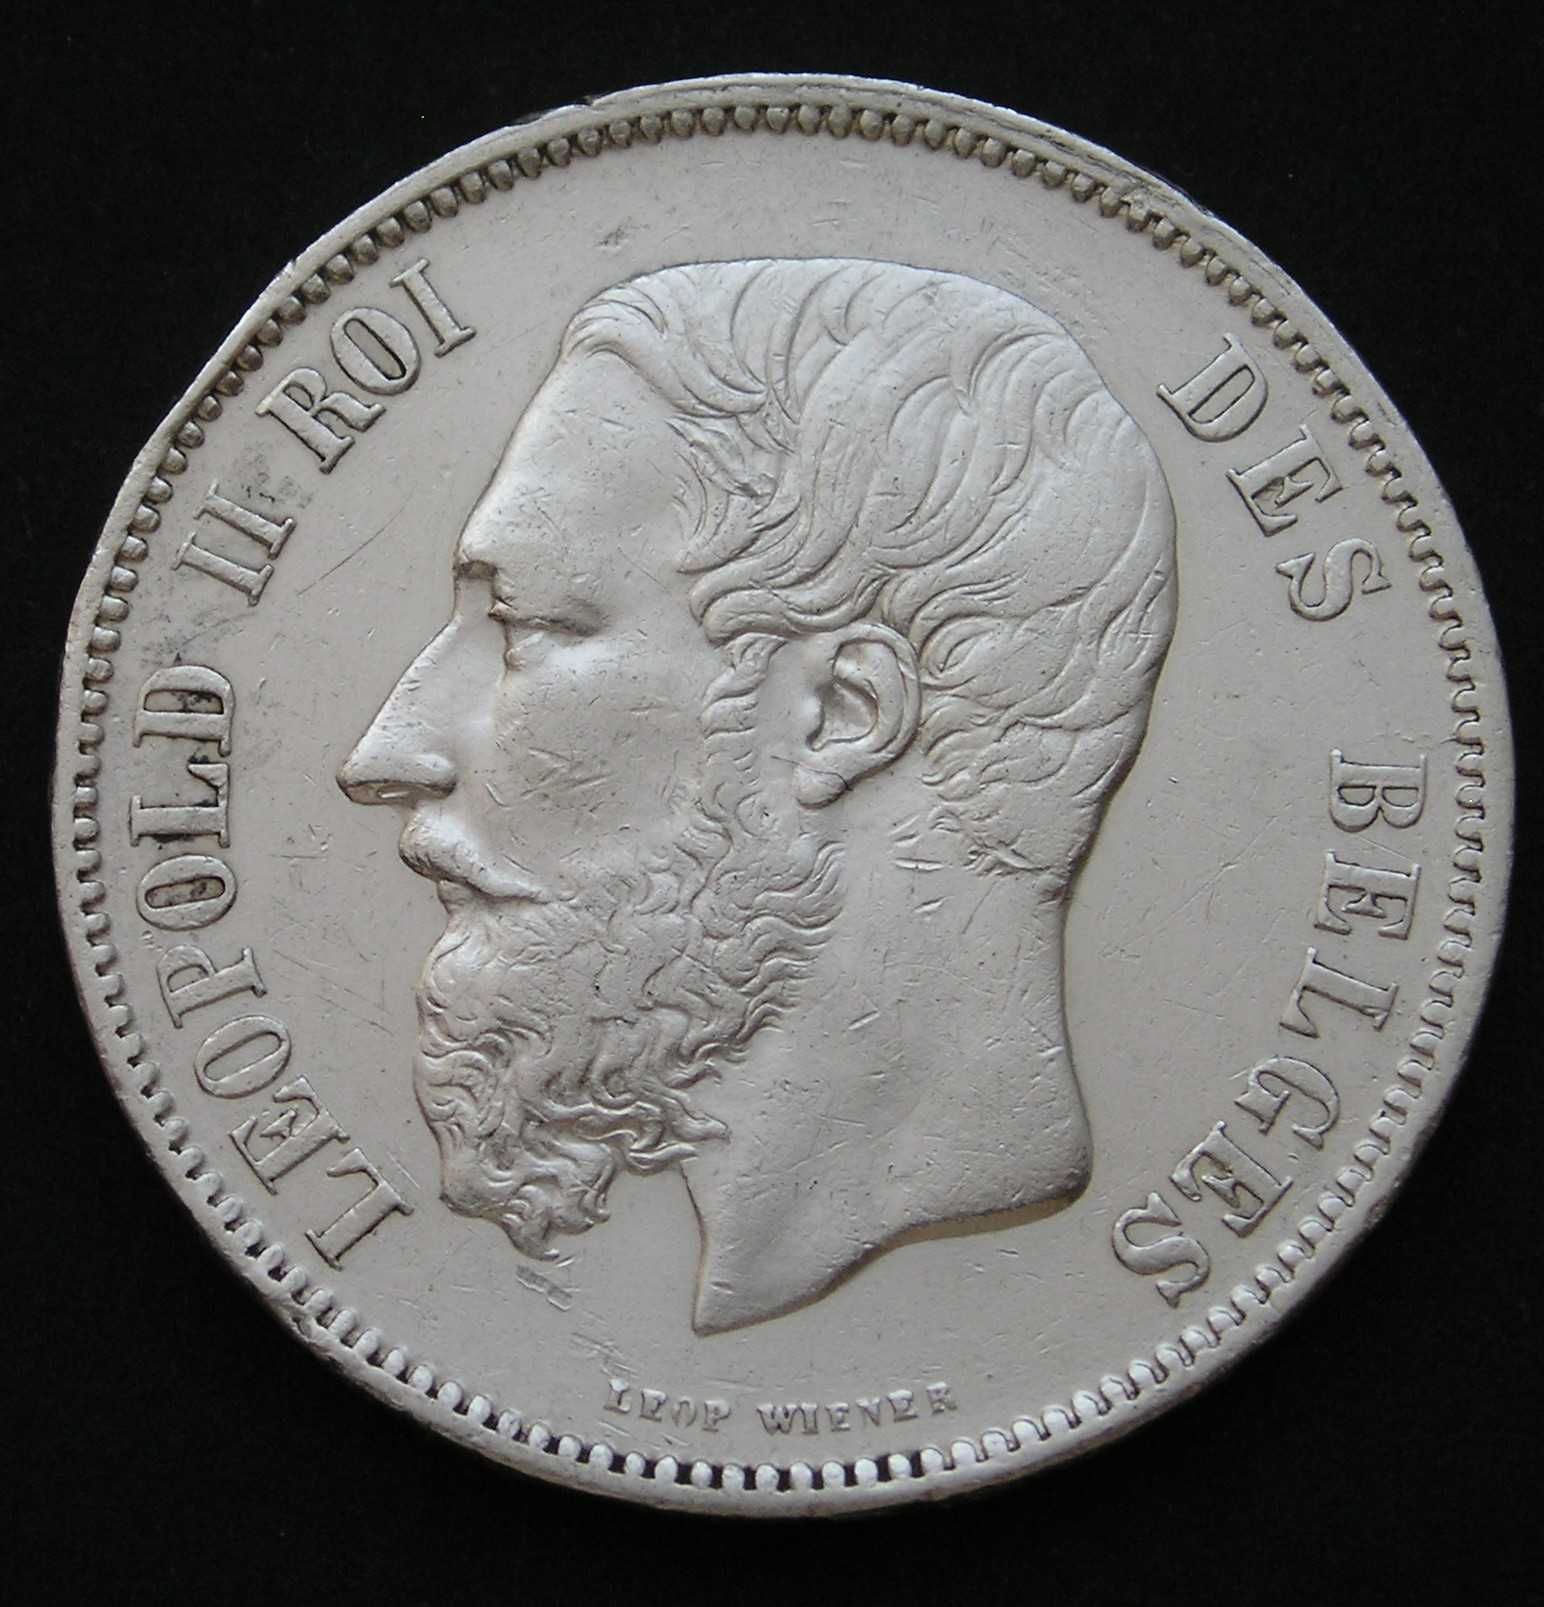 Belgia 5 franków 1869 - król Leopold II - srebro